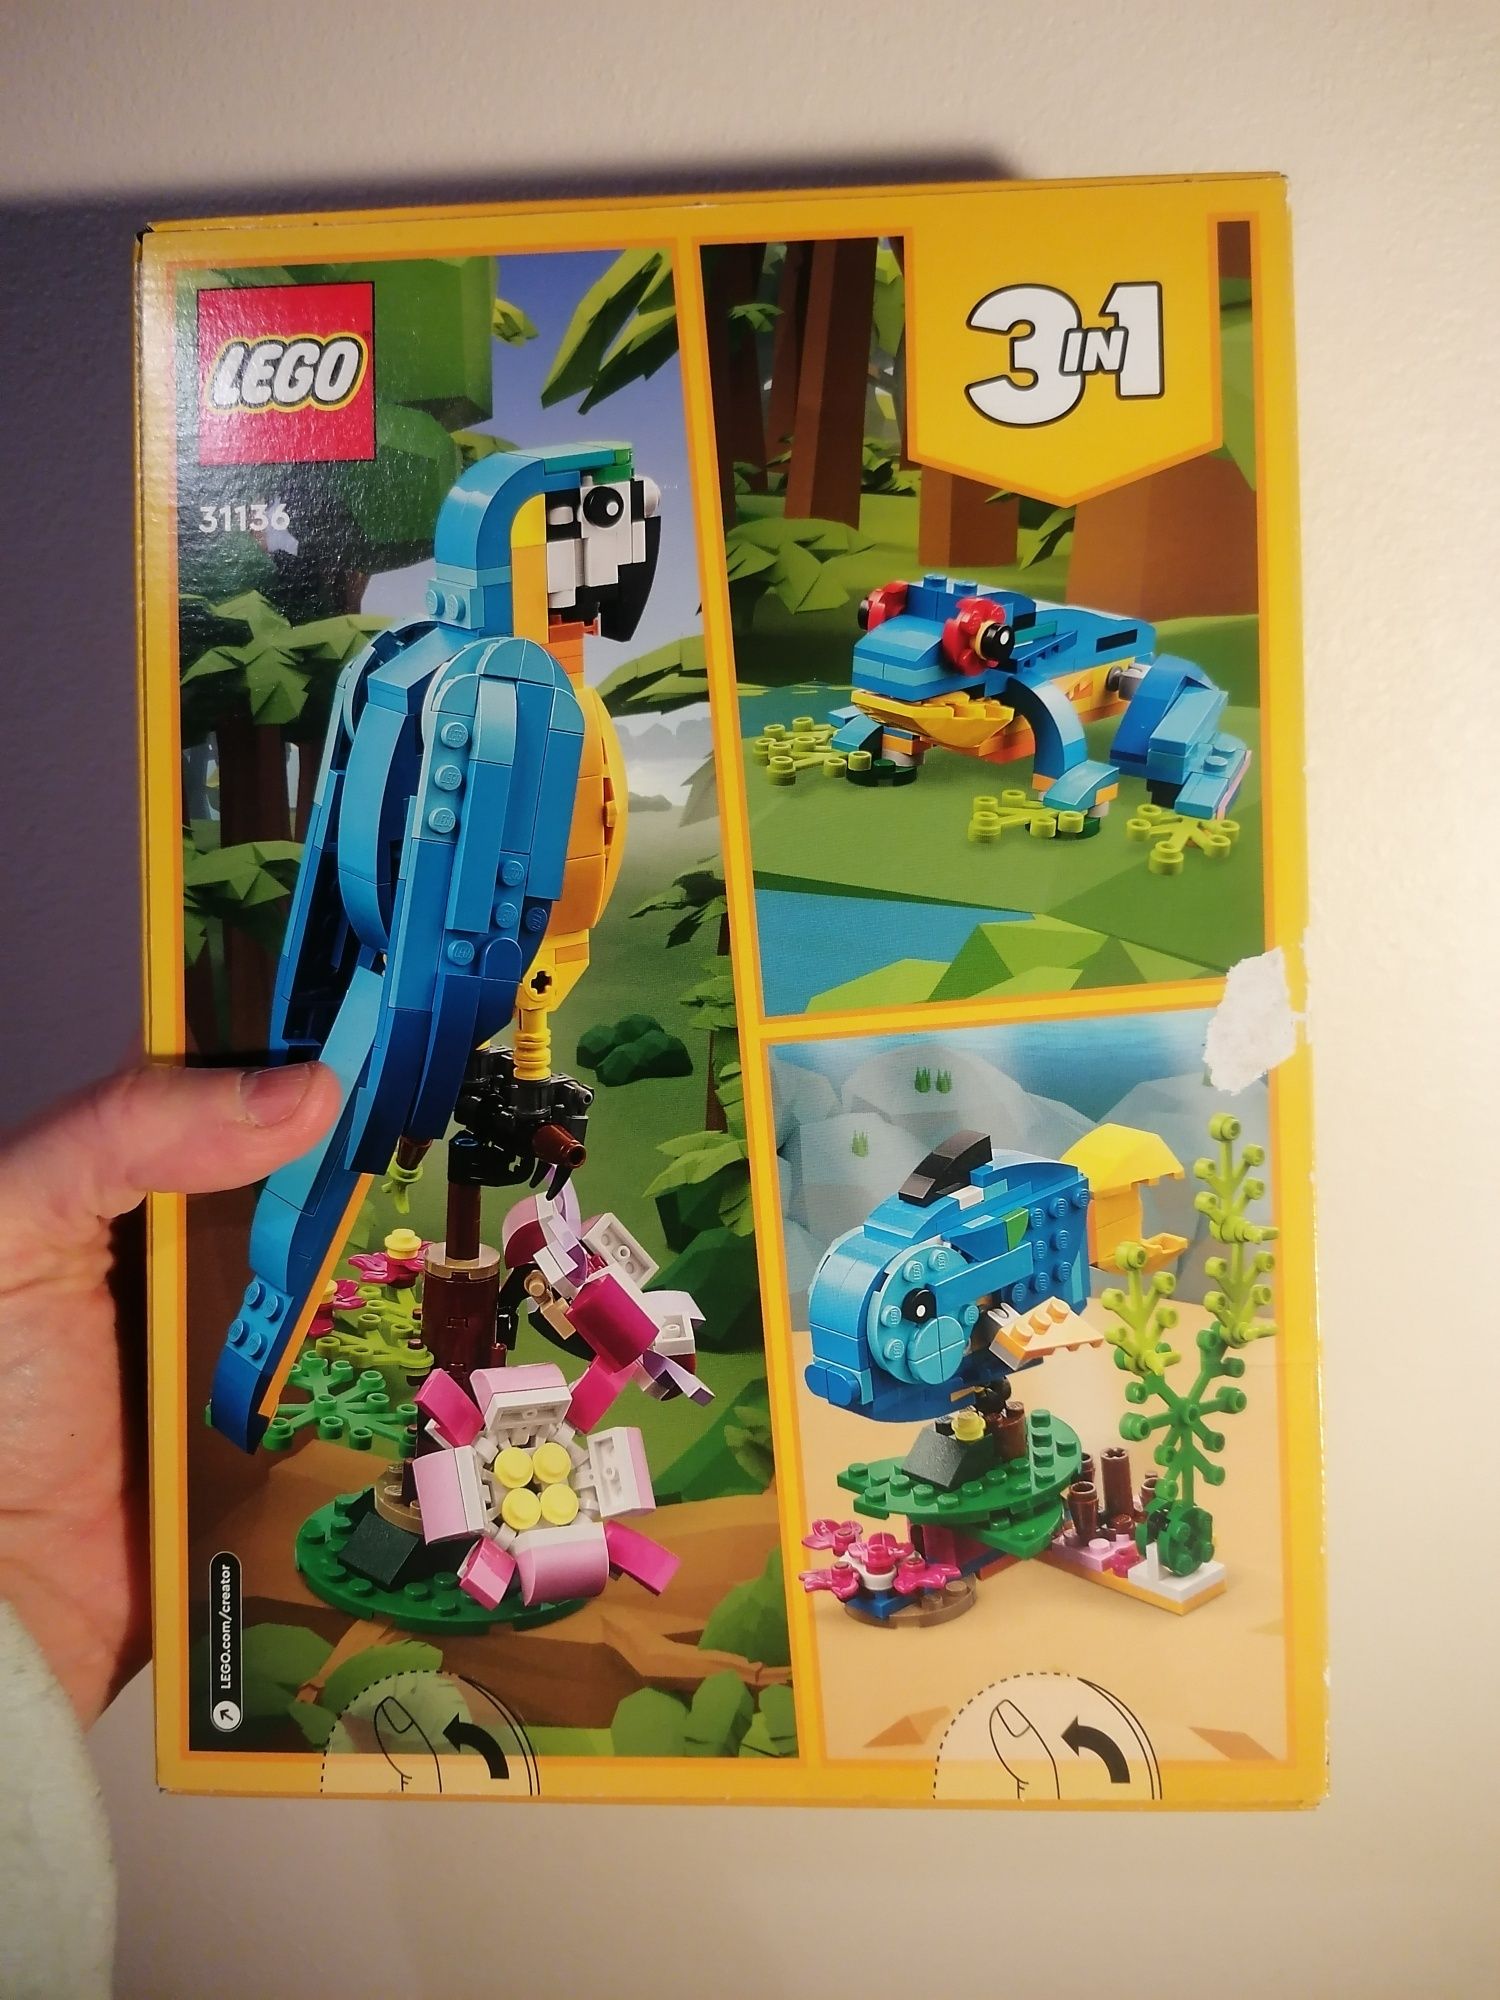 Lego creator 3 in 1 Blue Parrott #31136